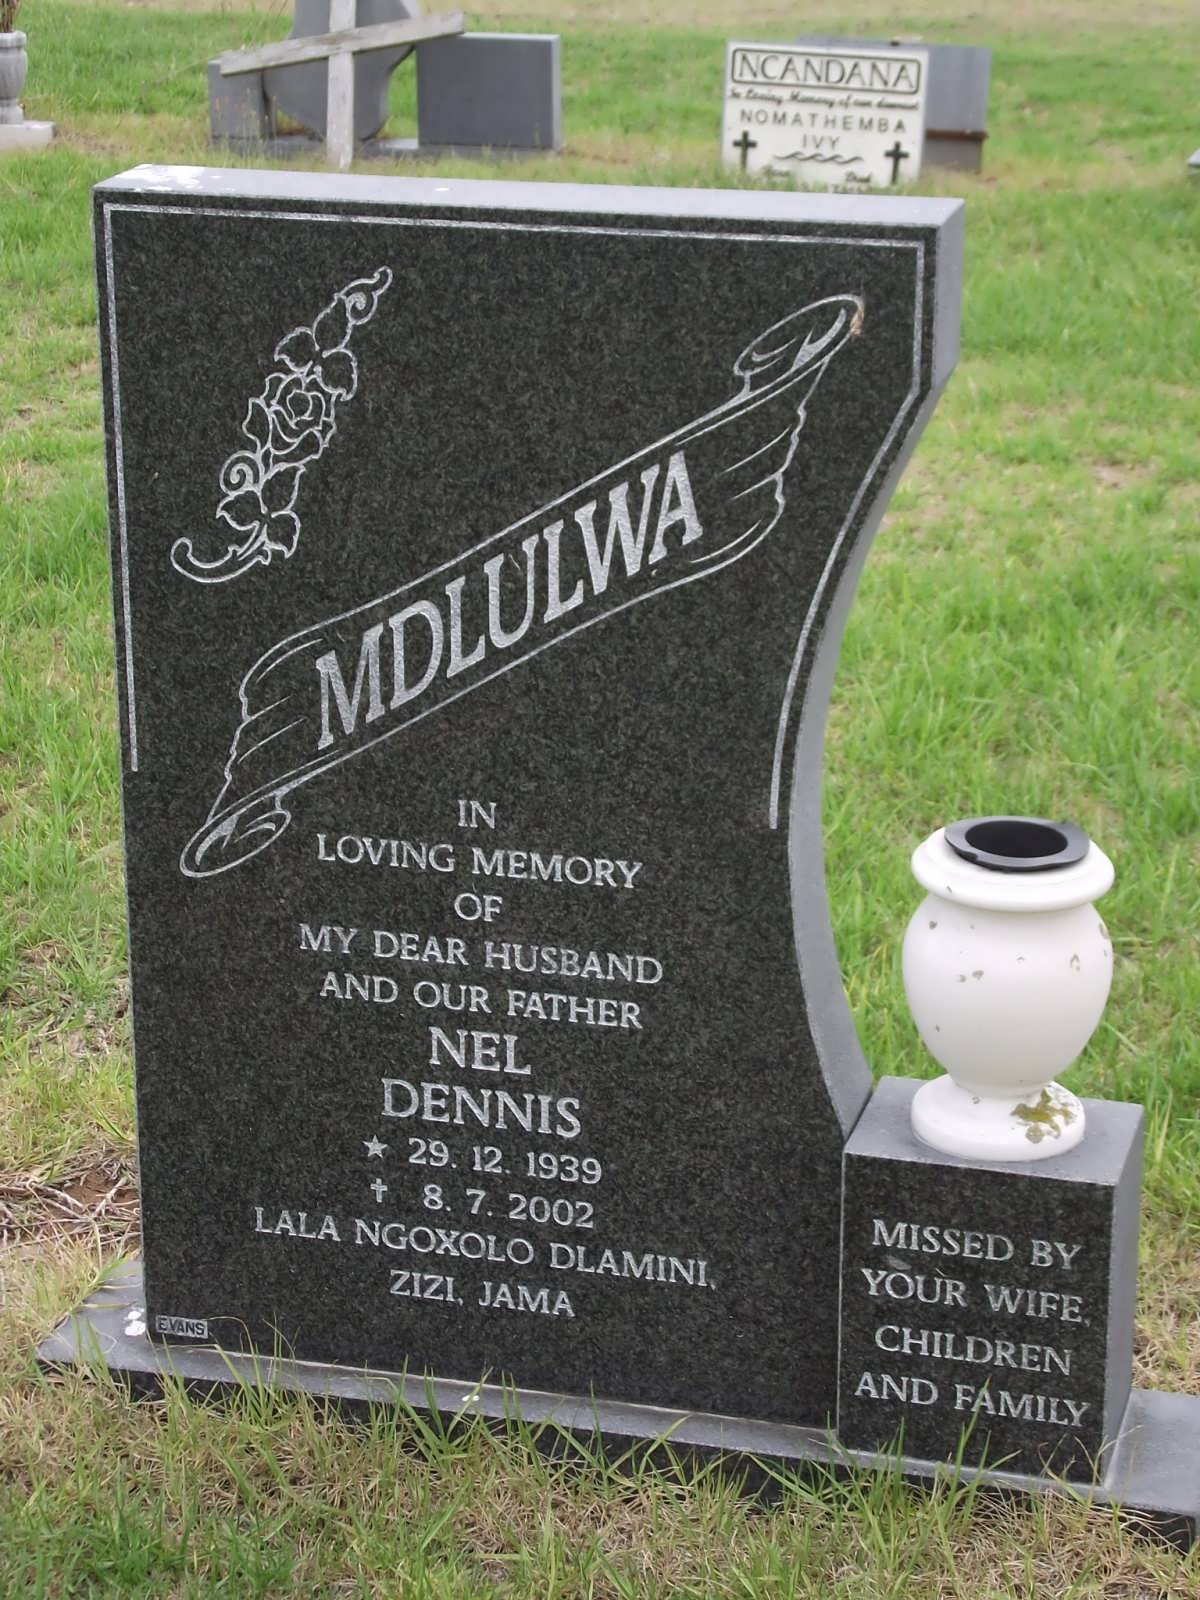 MDLULWA Nel Dennis 1939-2002